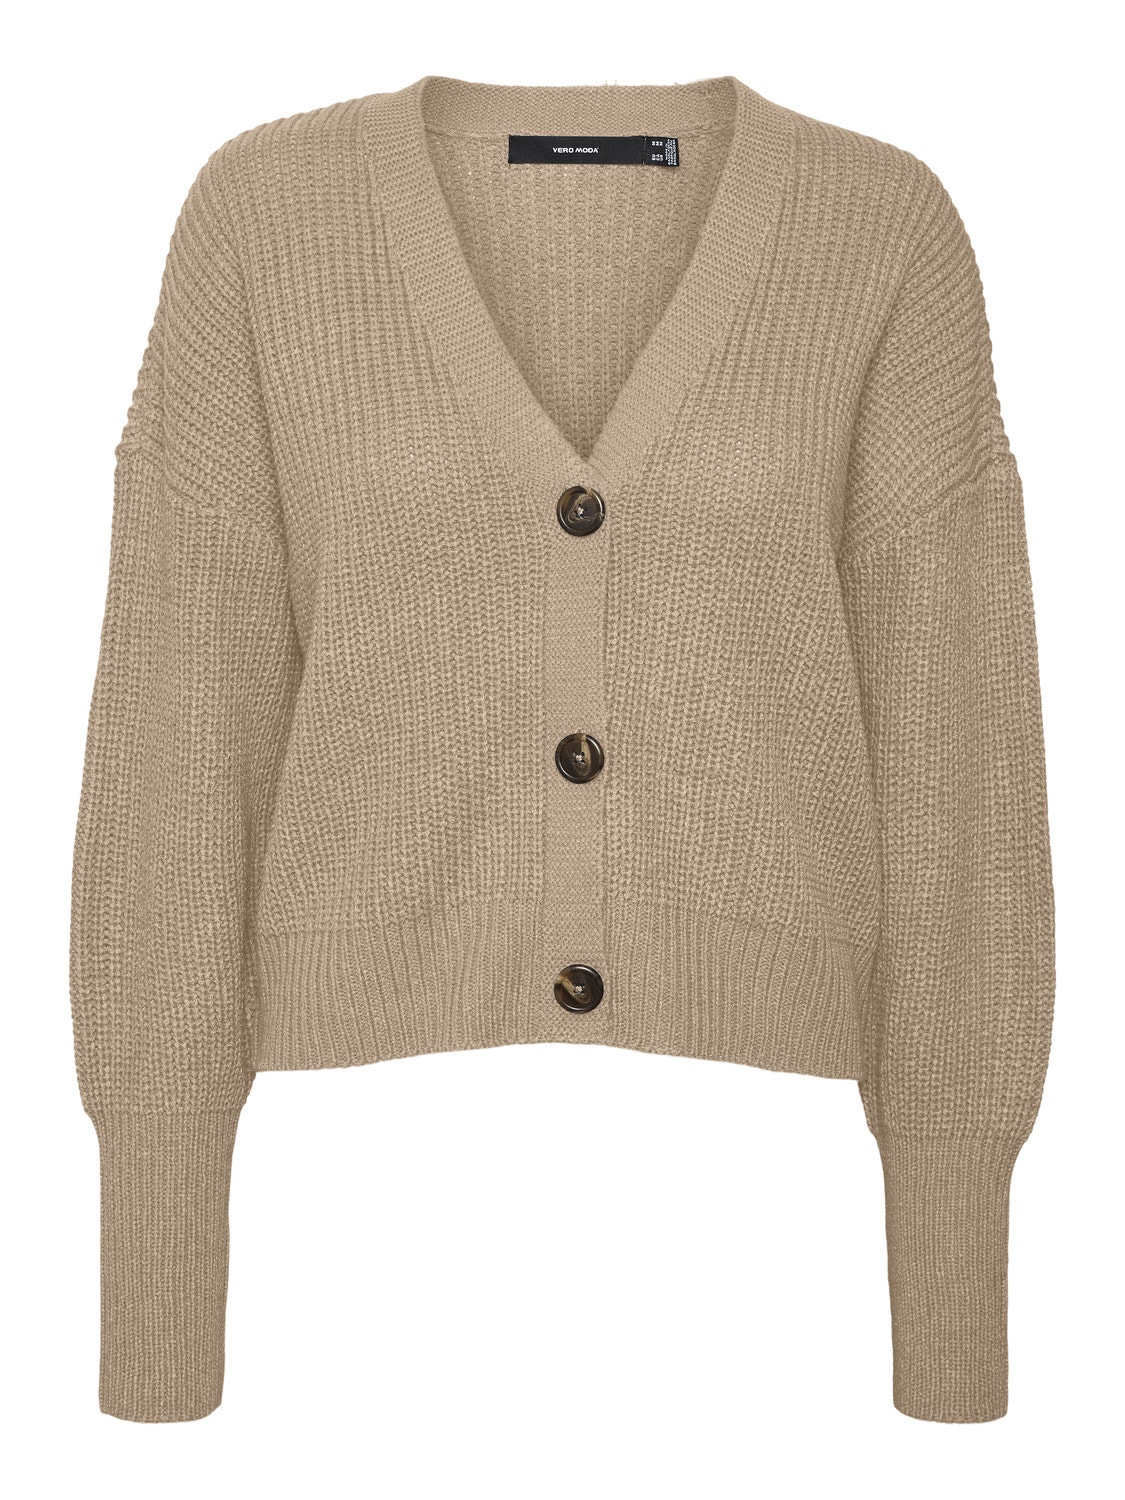 Vero Moda VMLEA Knit Cardigan -Nomad - 10249632